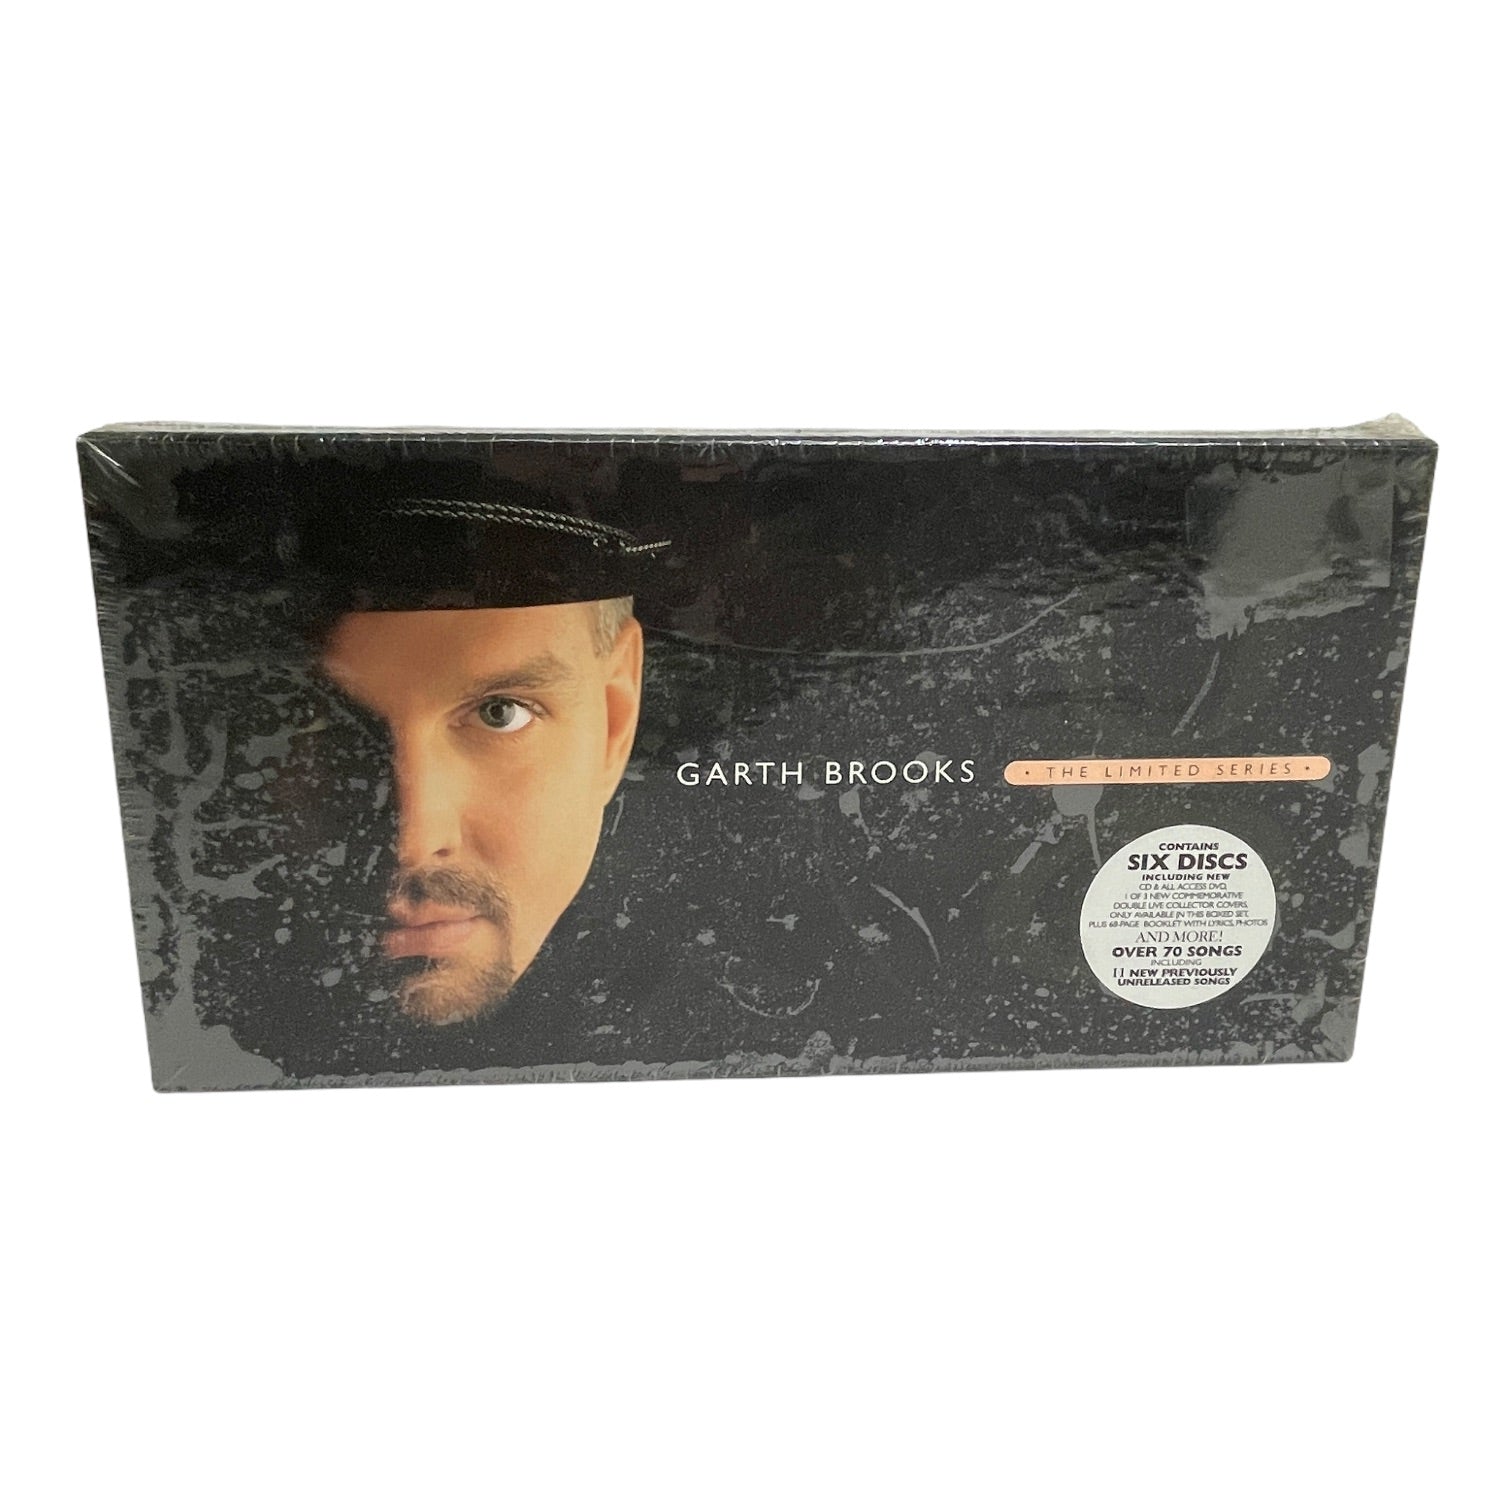 Garth Brooks The Limited Series Six Discs Box Set